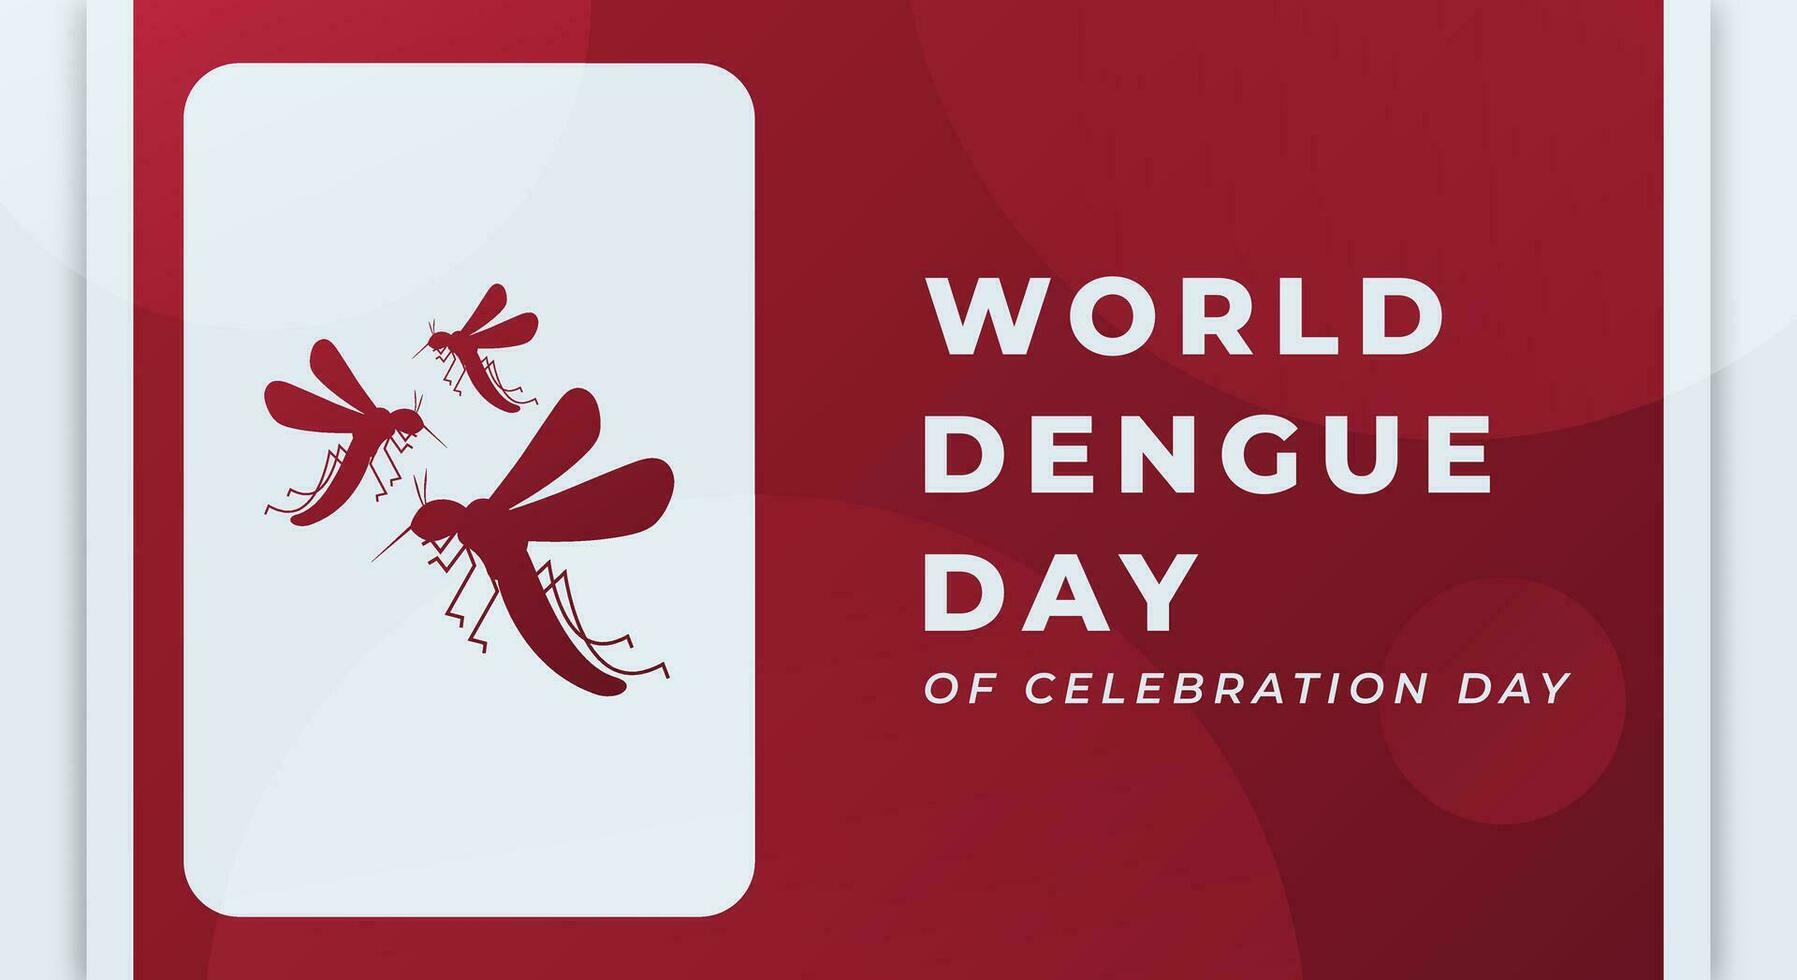 World Dengue Day Celebration Vector Design Illustration for Background, Poster, Banner, Advertising, Greeting Card